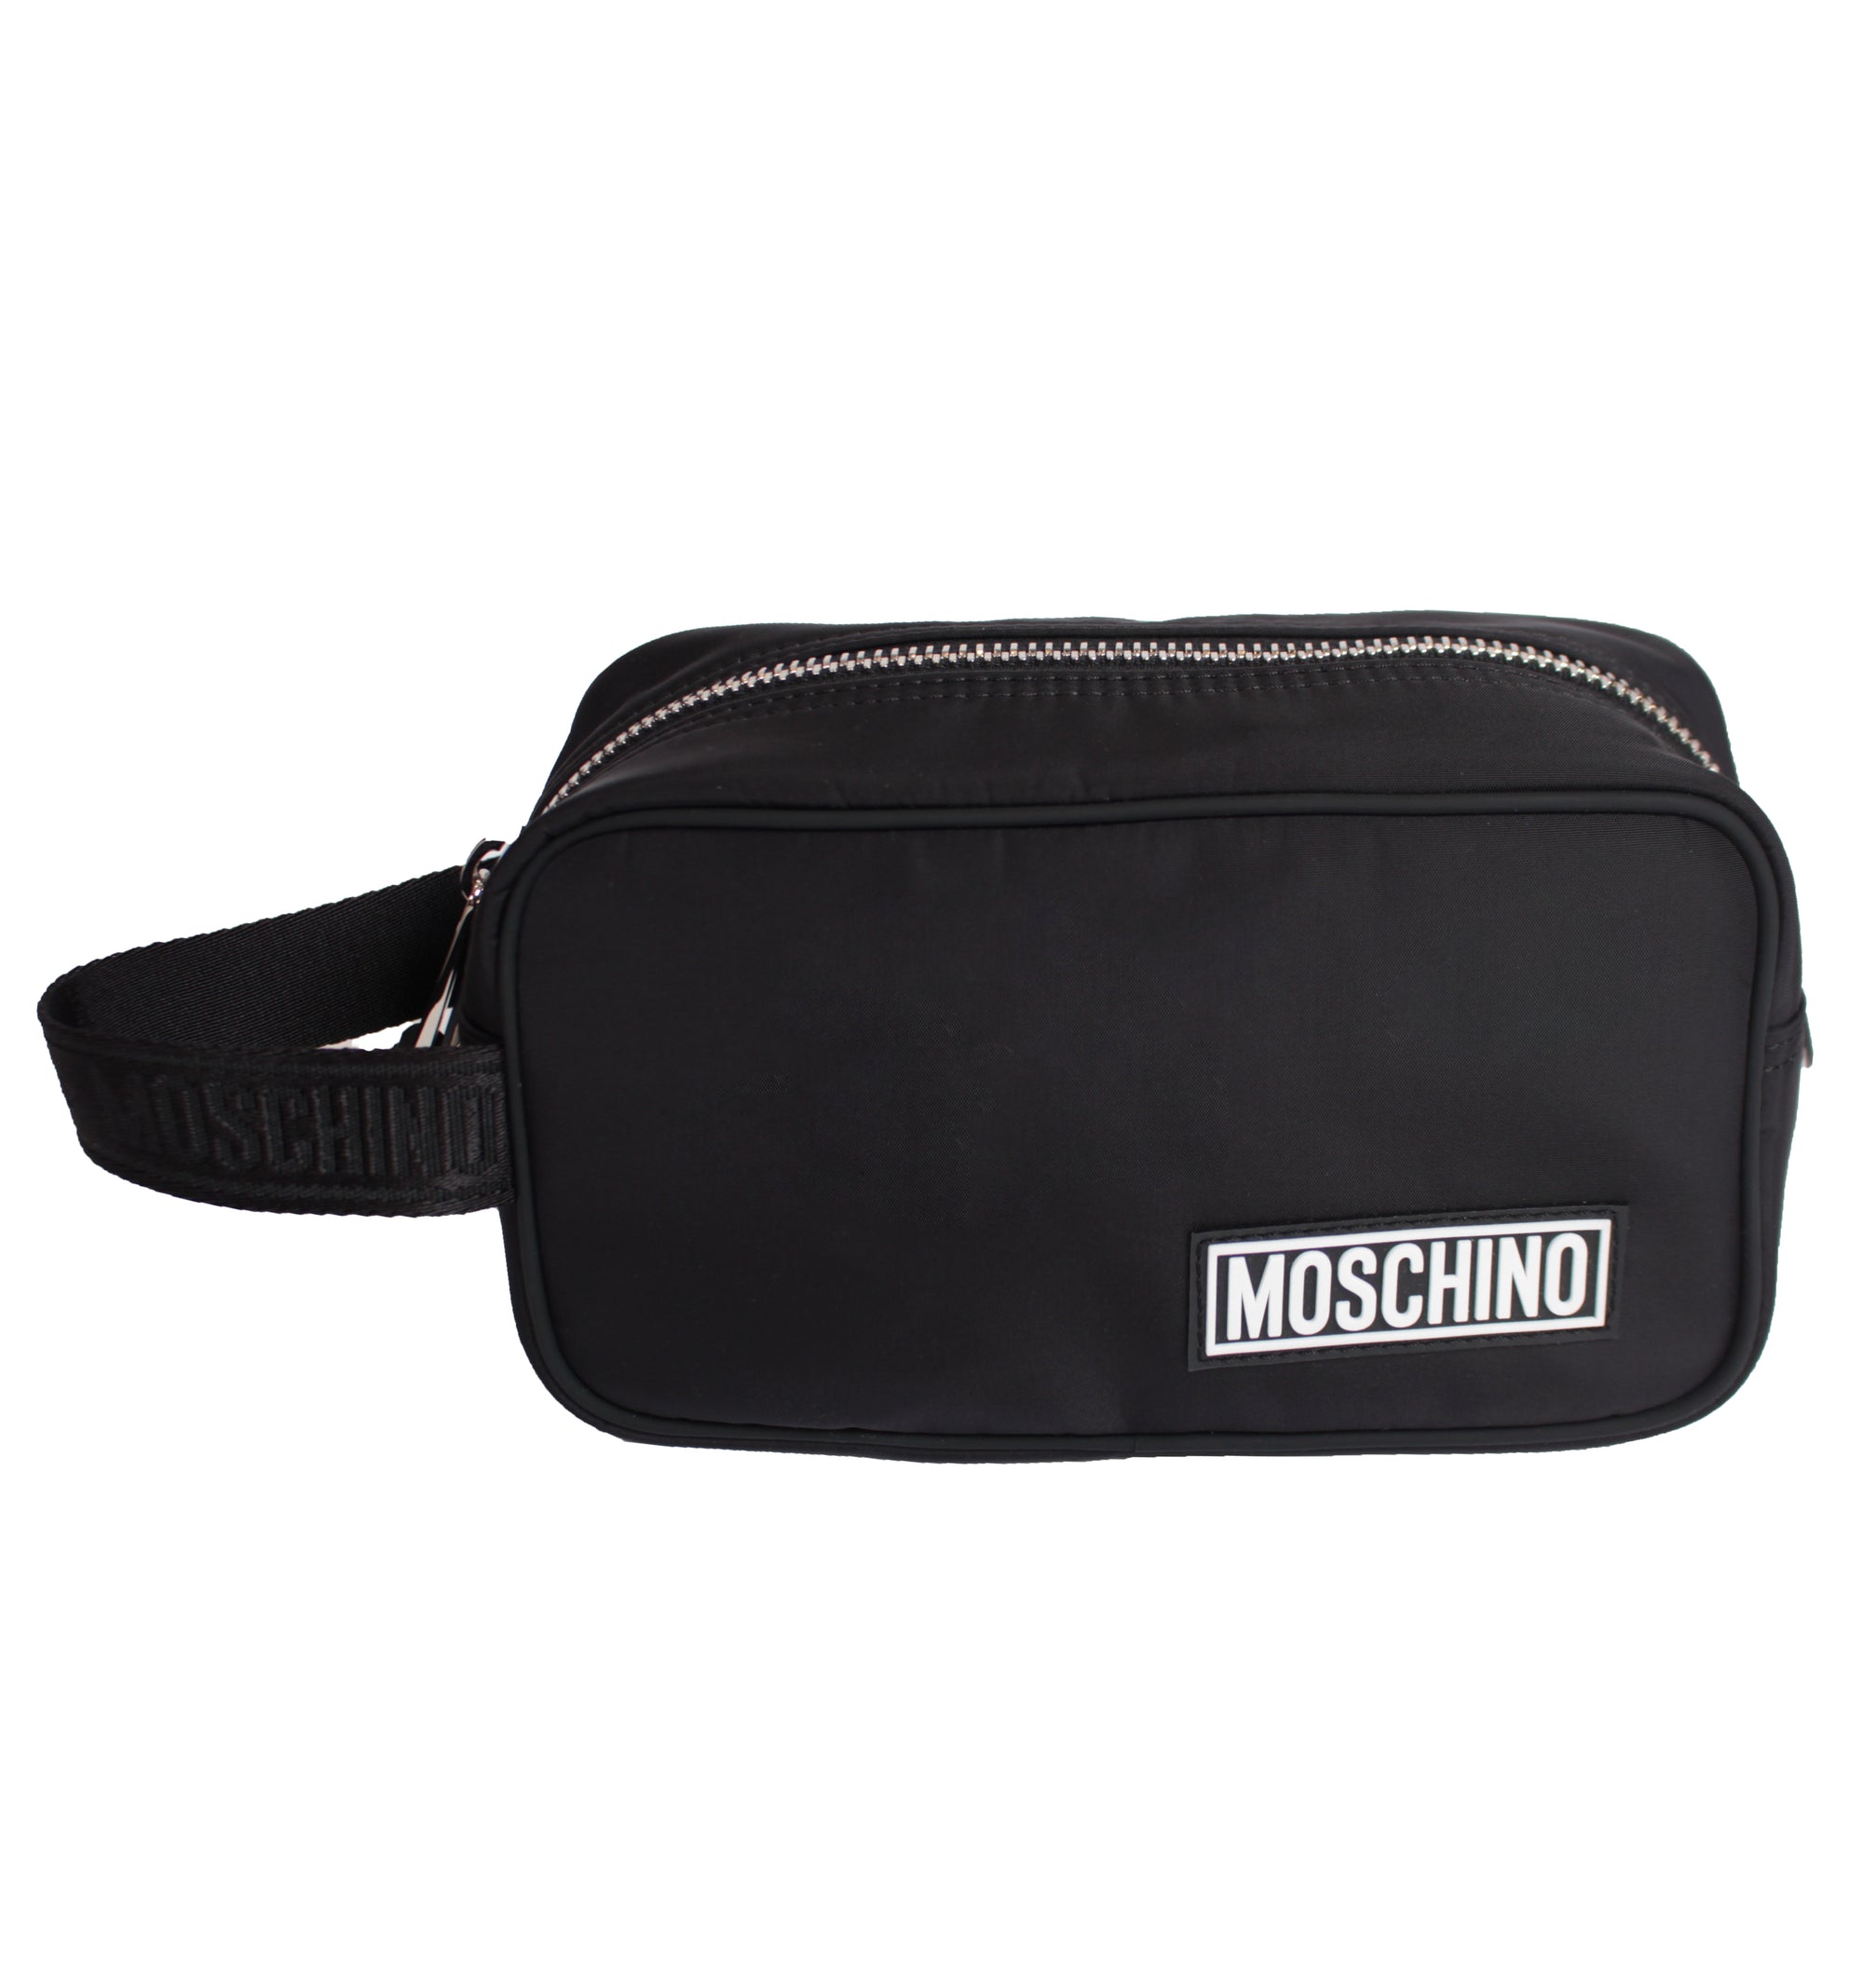 Moschino Accessories Pouch - Black